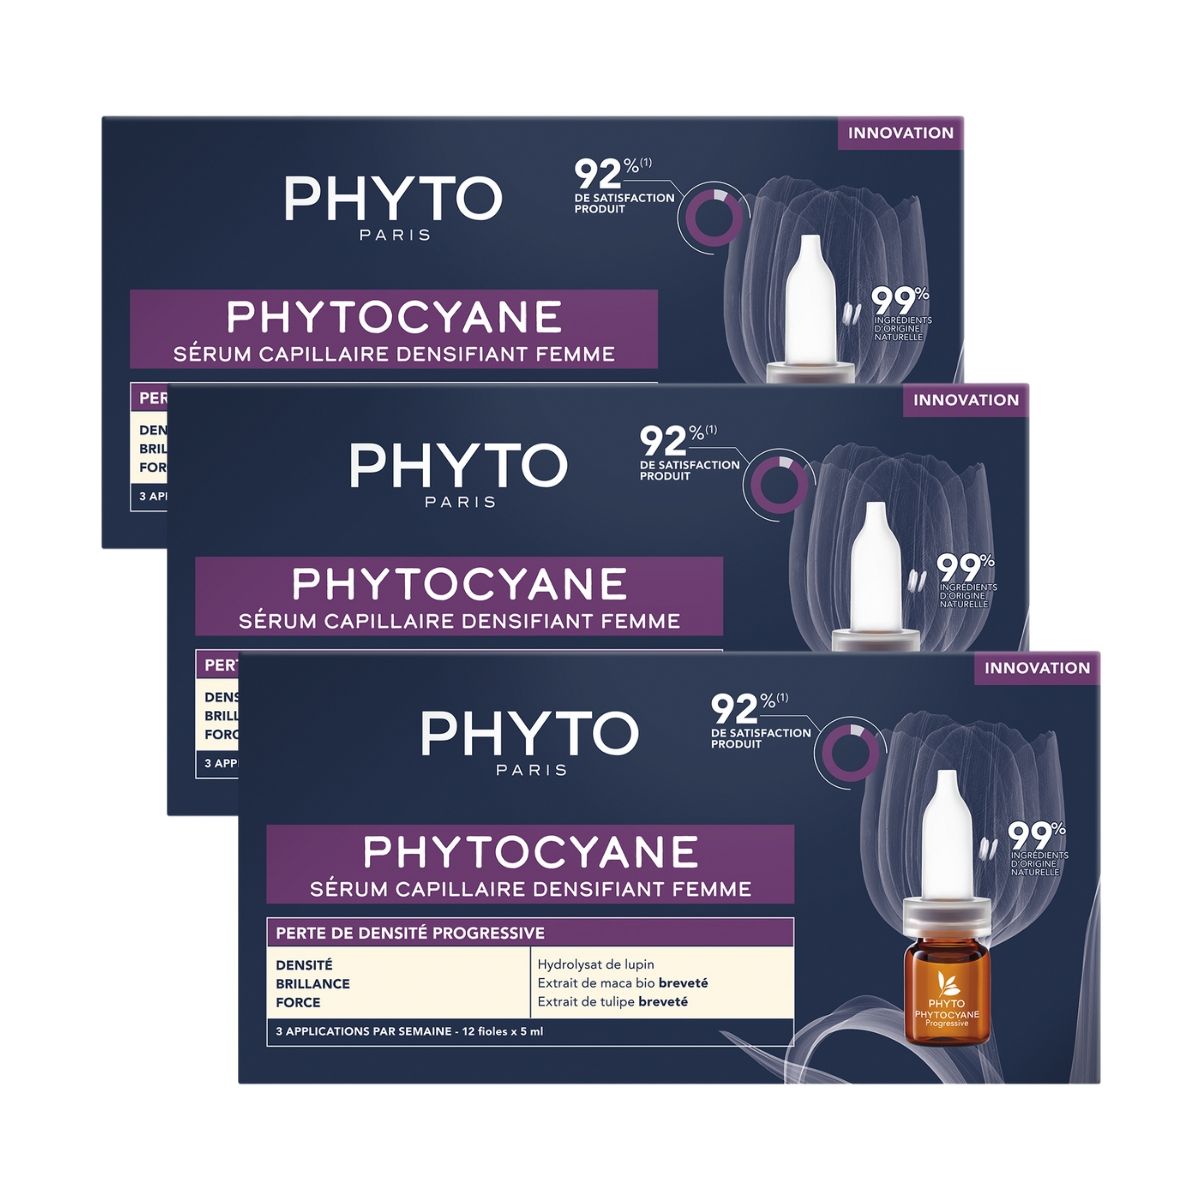 PHYTOCYANE - Densifying Hair Serum For Women Trio